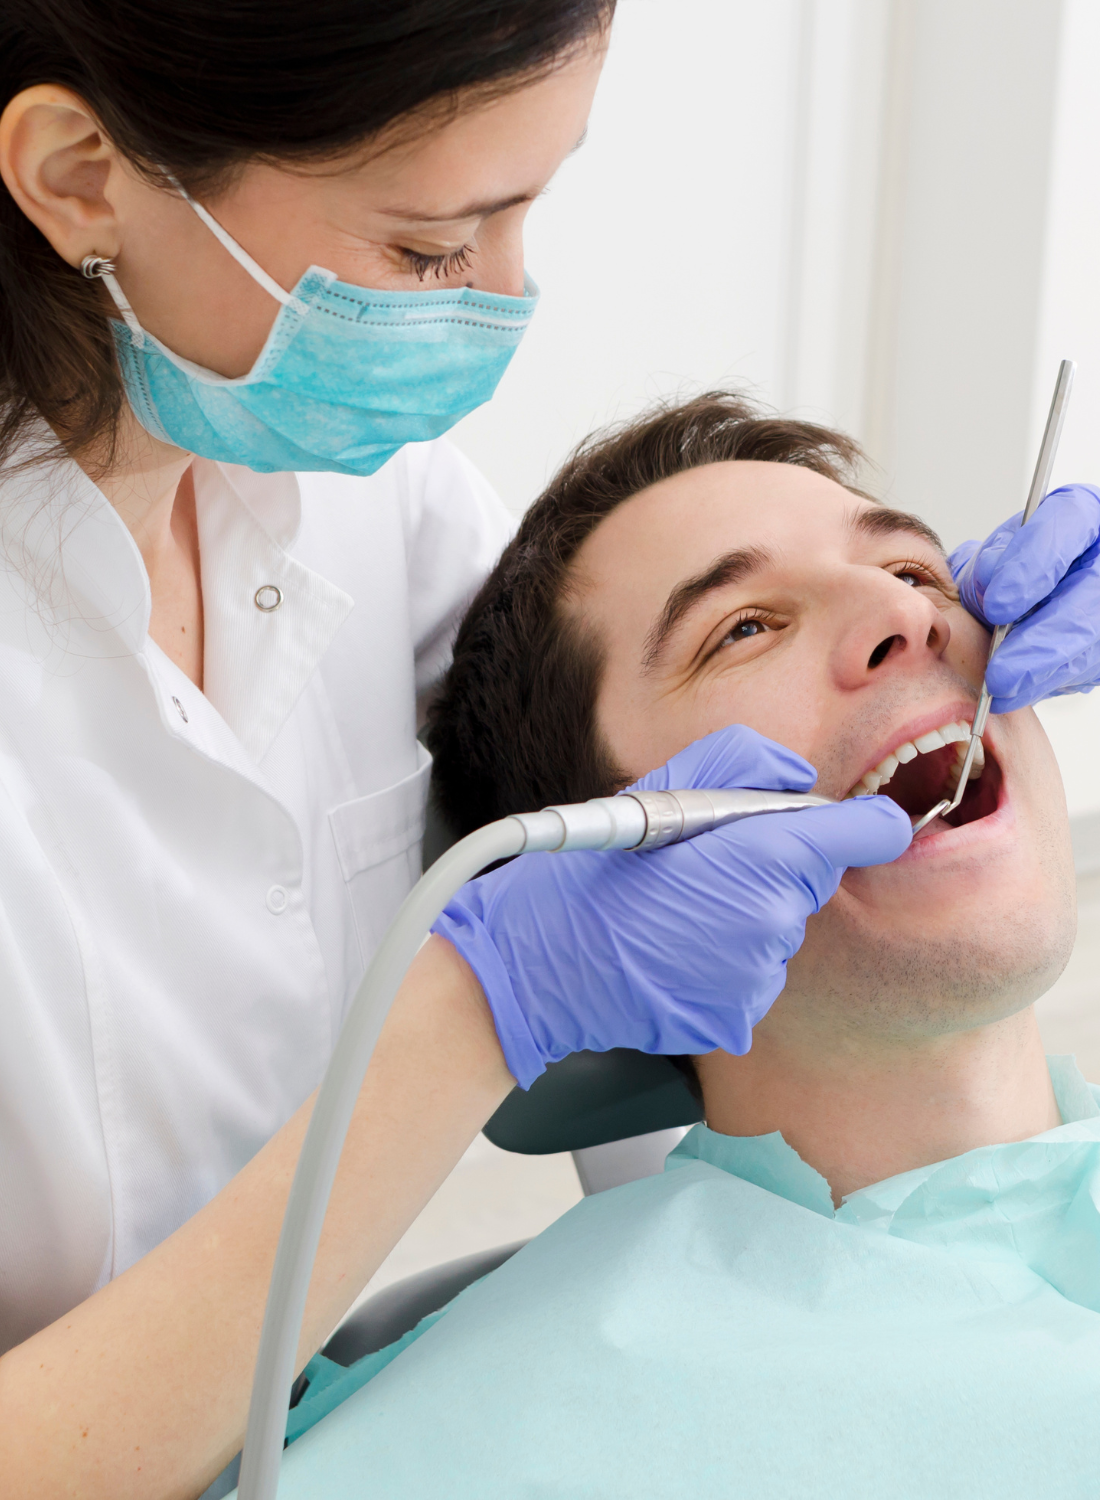 Dentist Cleaning Teeth